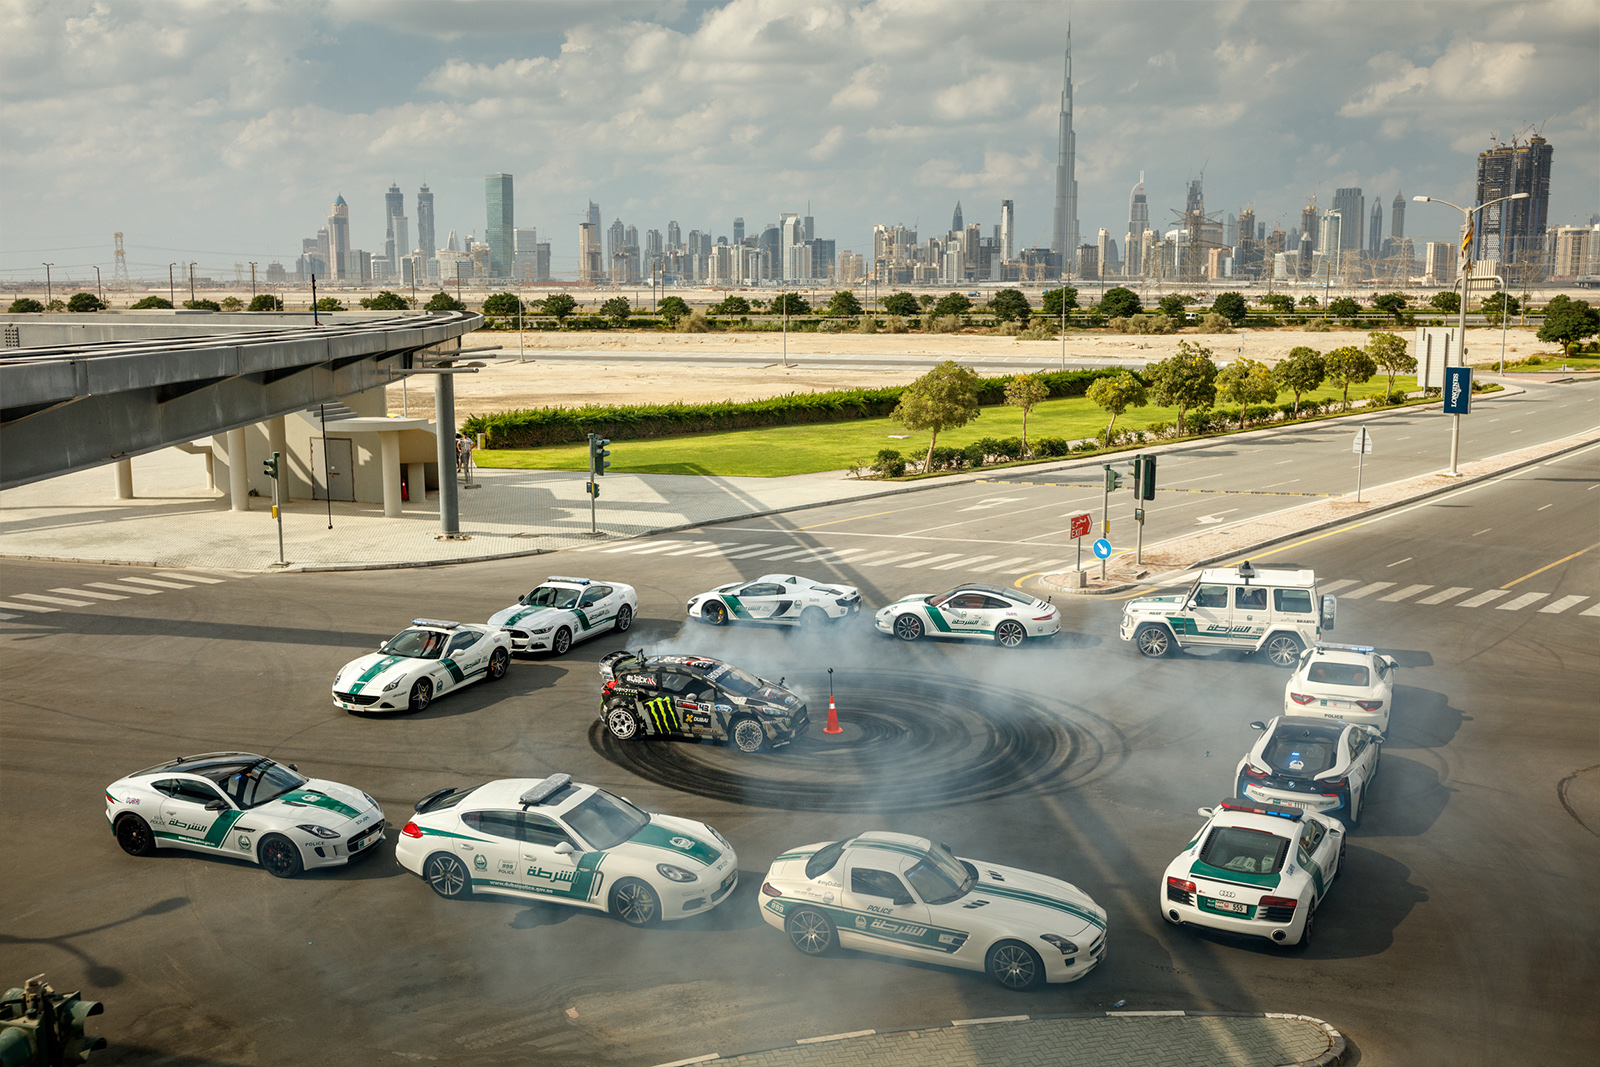 Ken Block Gymkhana Eight video features £1.3m worth of Dubai police cars